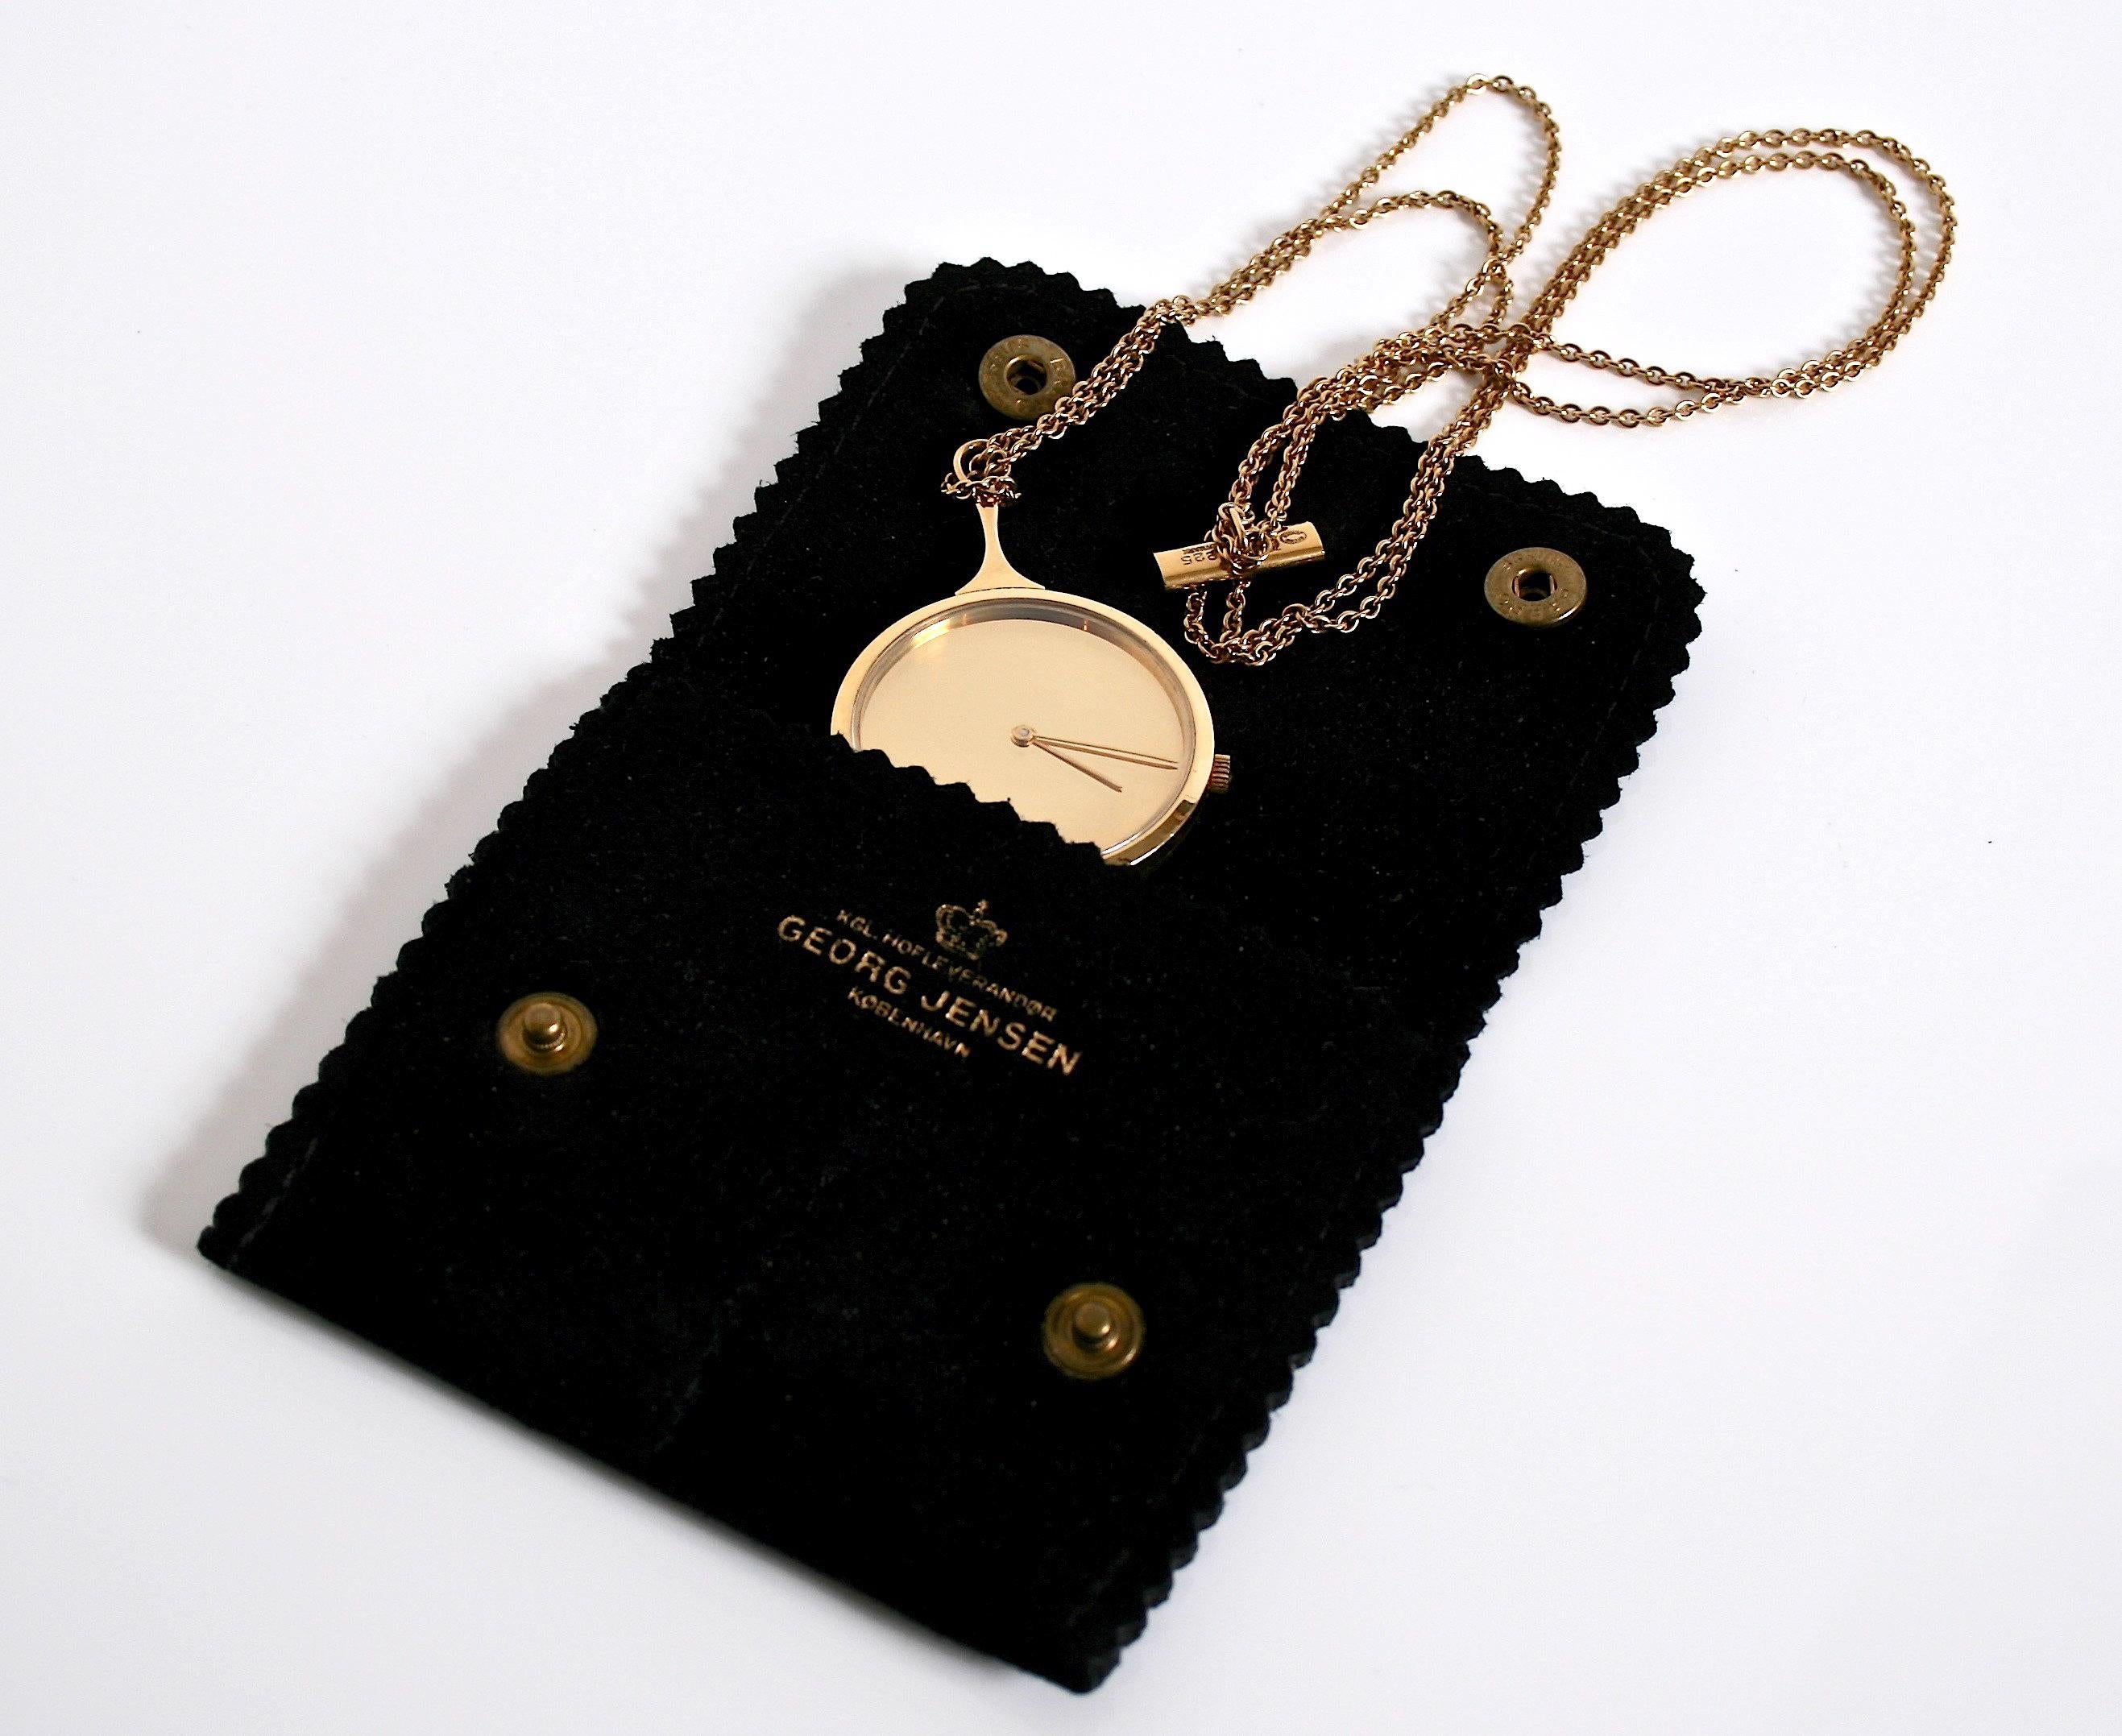 Georg Jensen 18 karat Gold Pendant Watch designed by Vivianna Torun Bulow-Hube  In Good Condition For Sale In London, GB